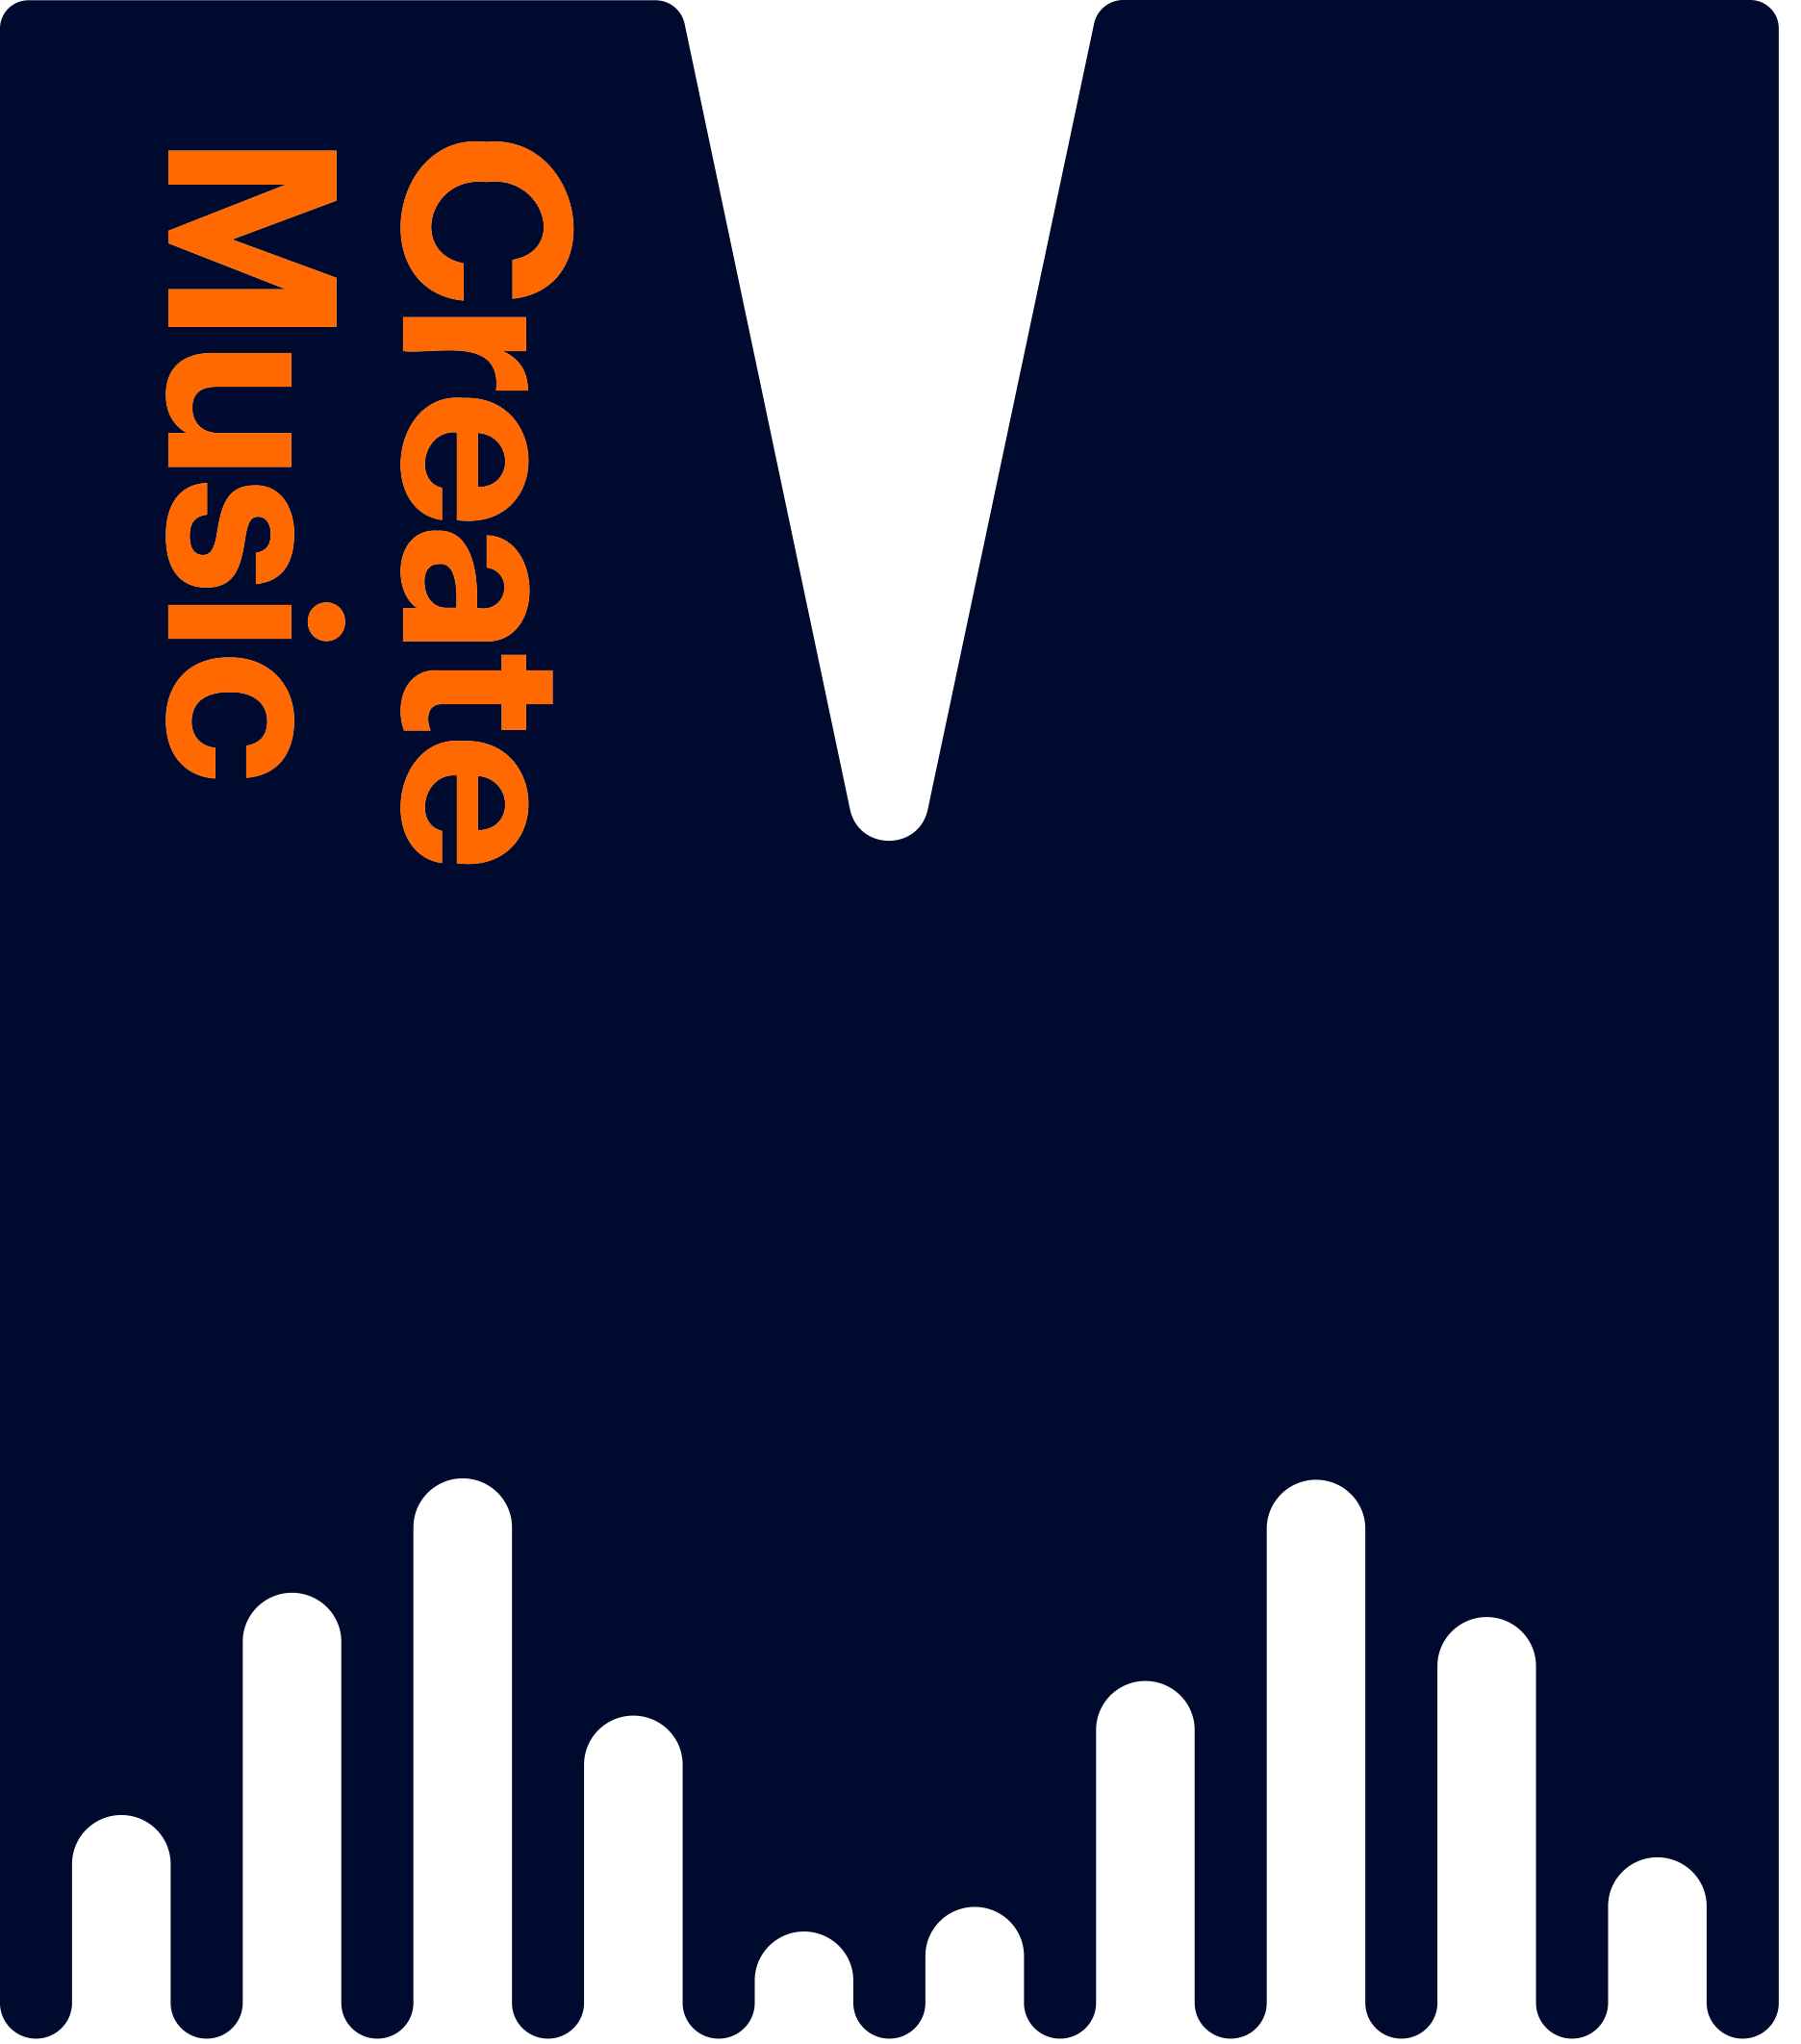 Create Music Logo